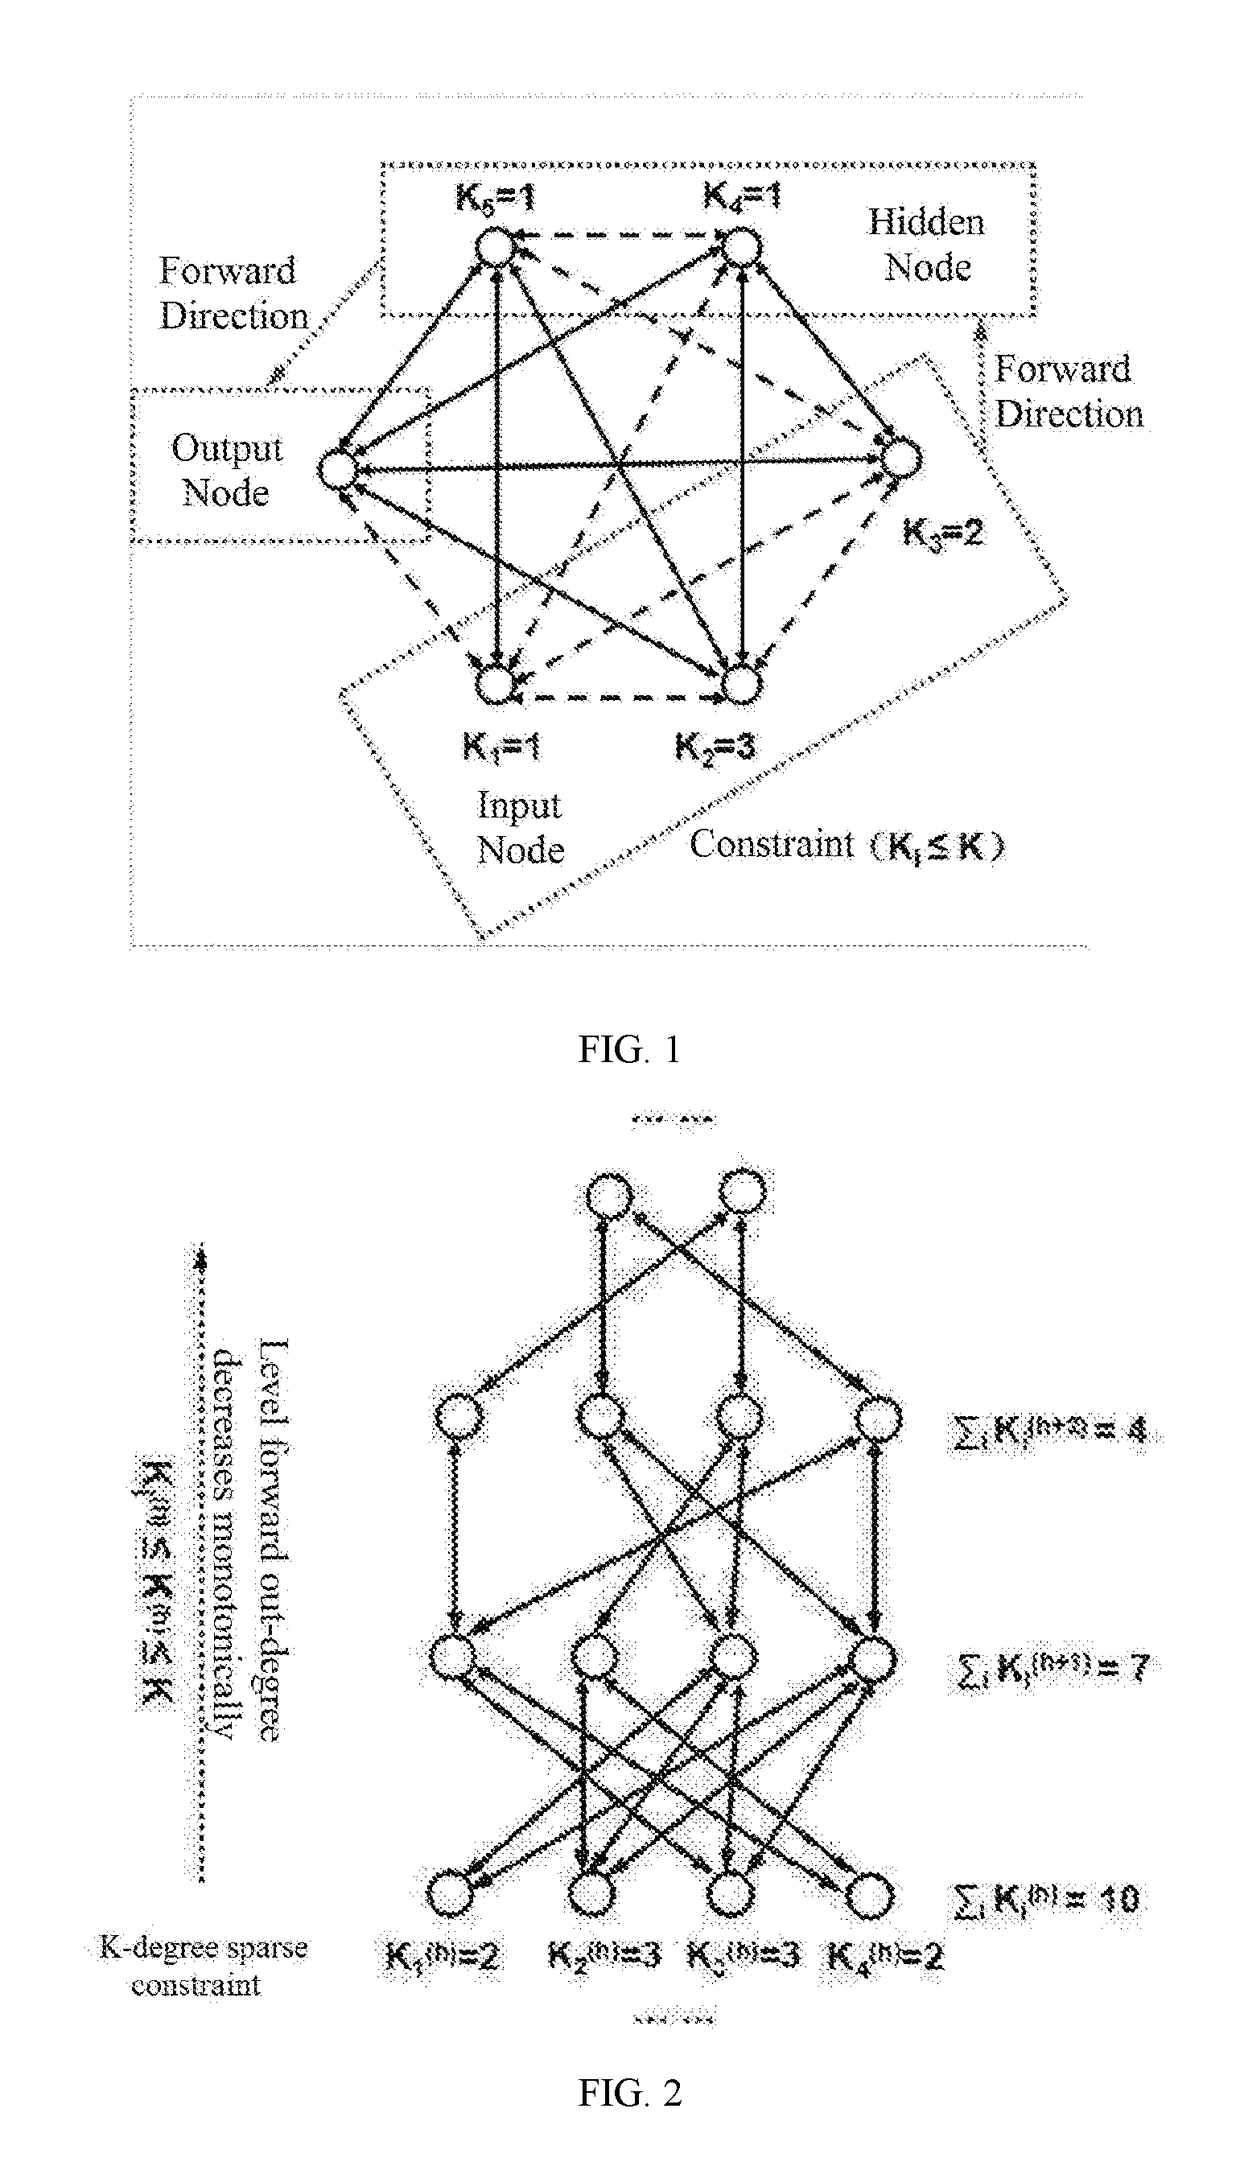 Big data processing method based on deep learning model satisfying k-degree sparse constraint